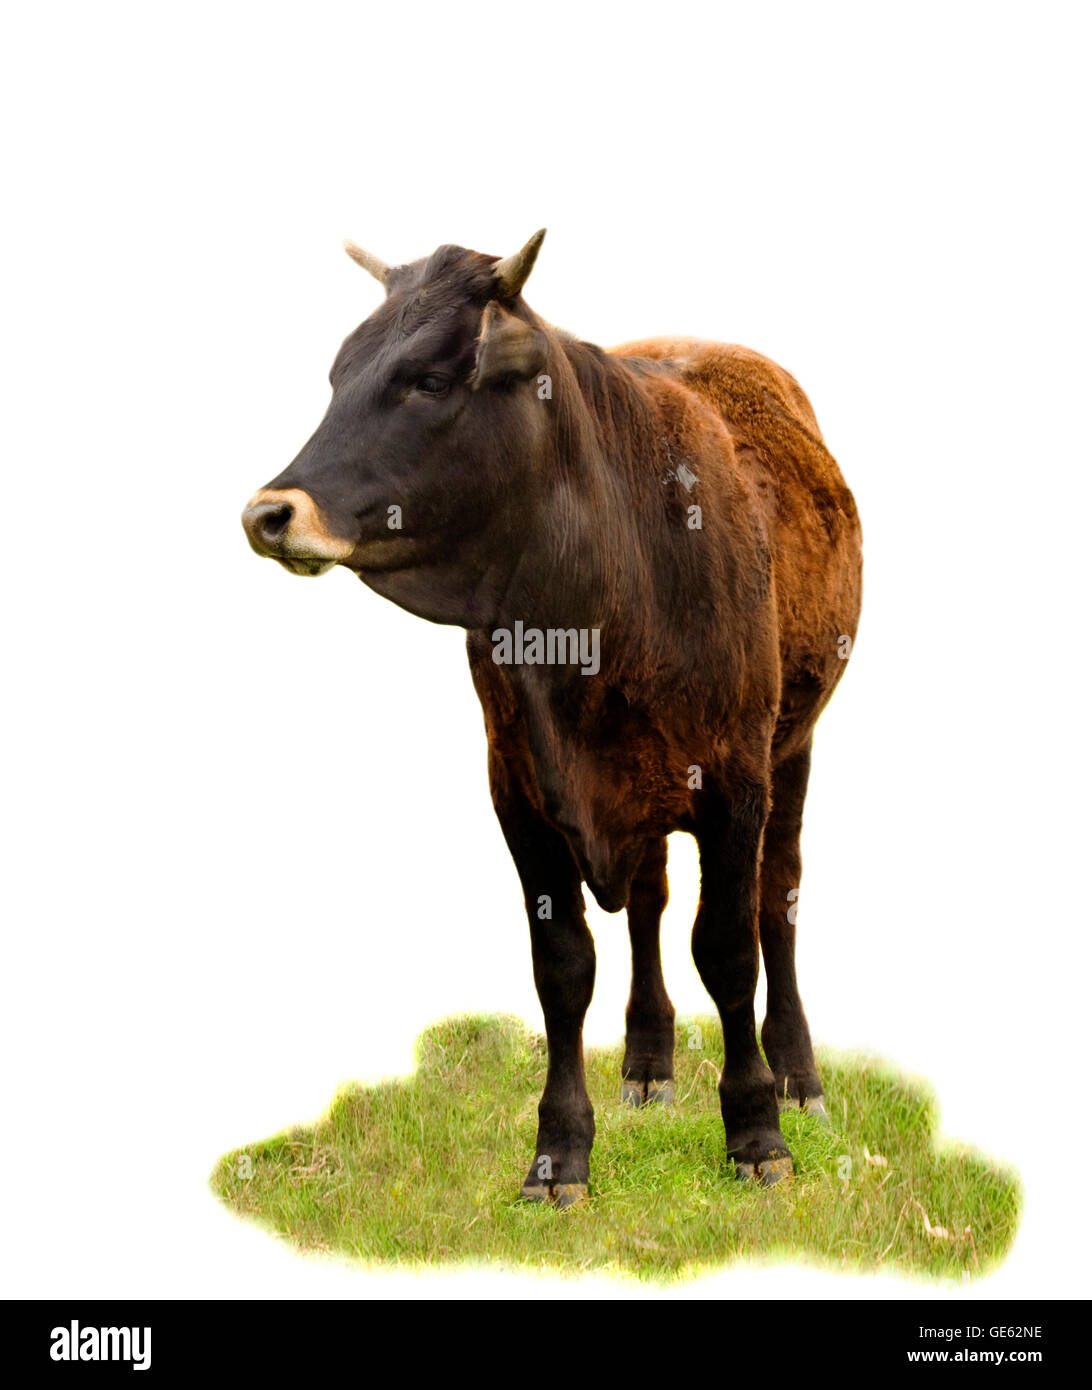 Australian beef cattle breed - cow isolated on white - angus, charolais, brahman cross Stock Photo